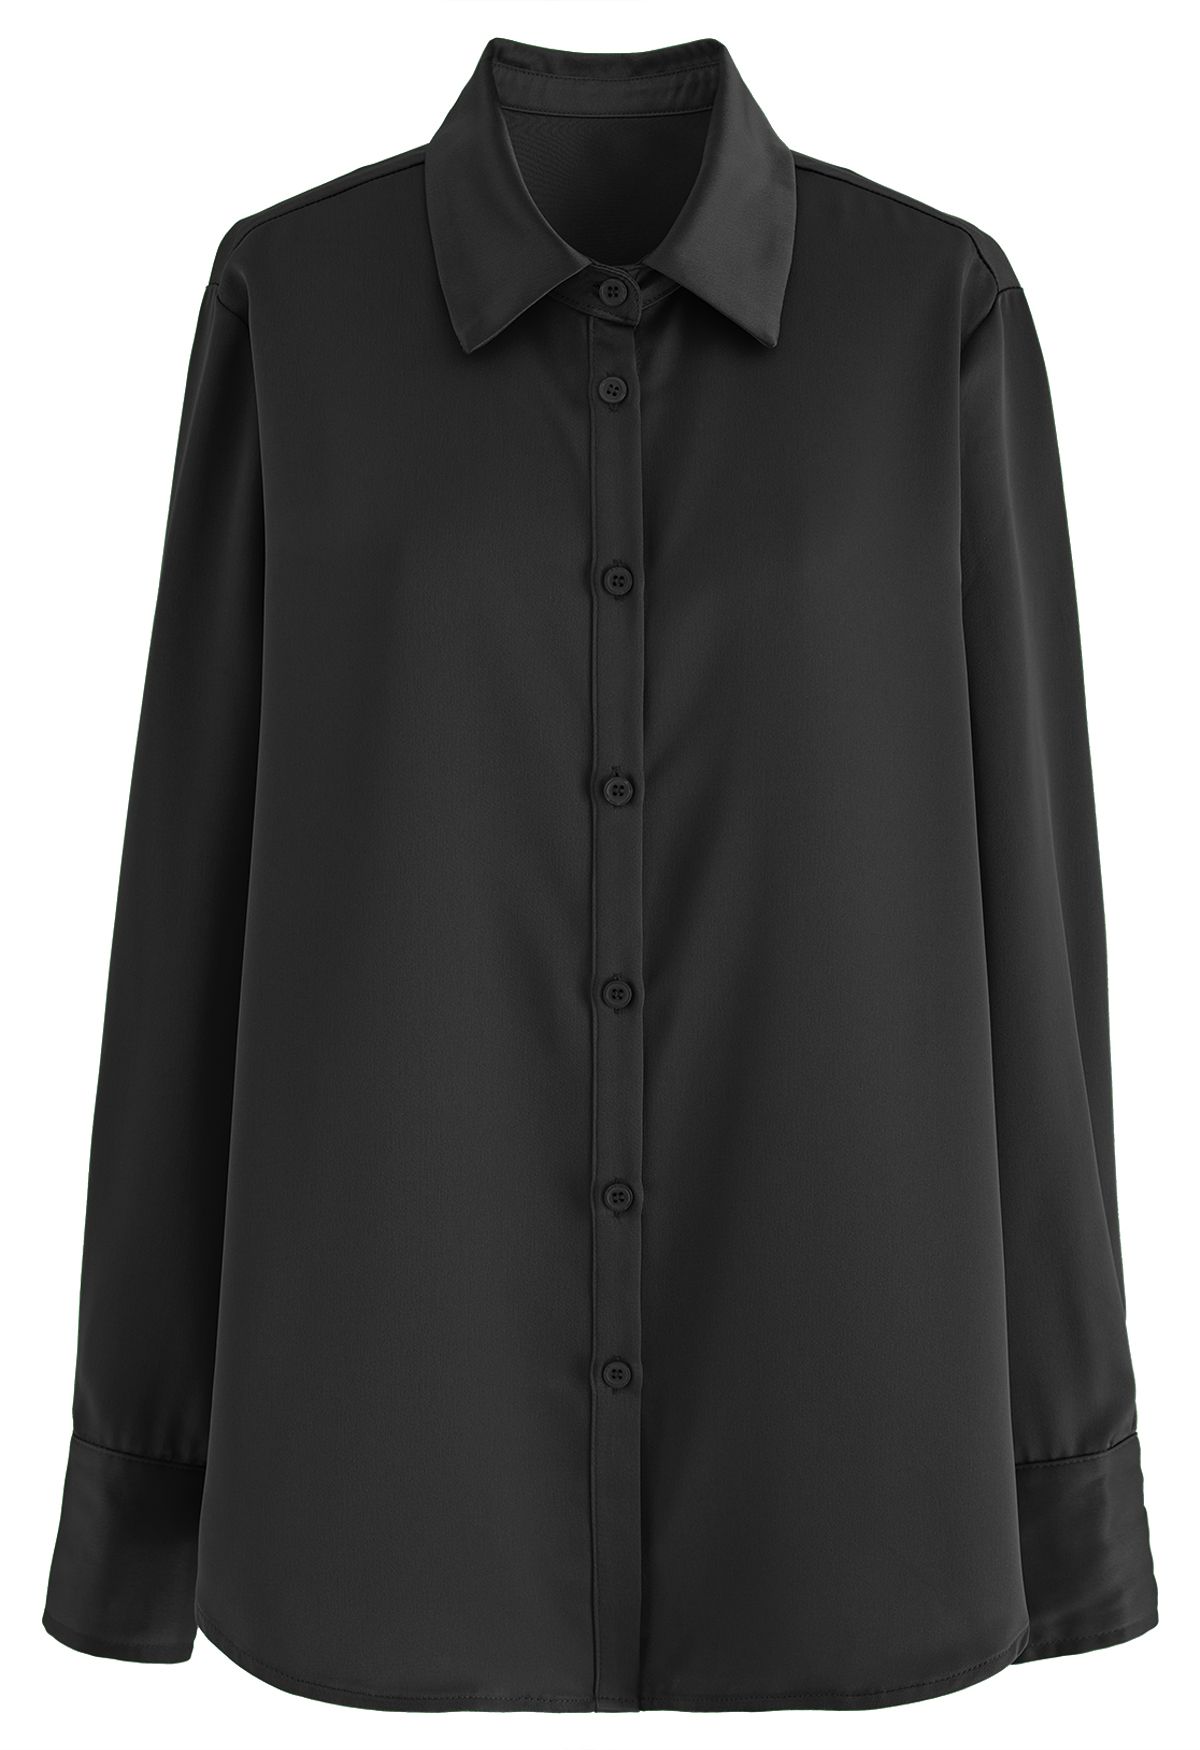 Satin Finish Button Up Shirt in Black